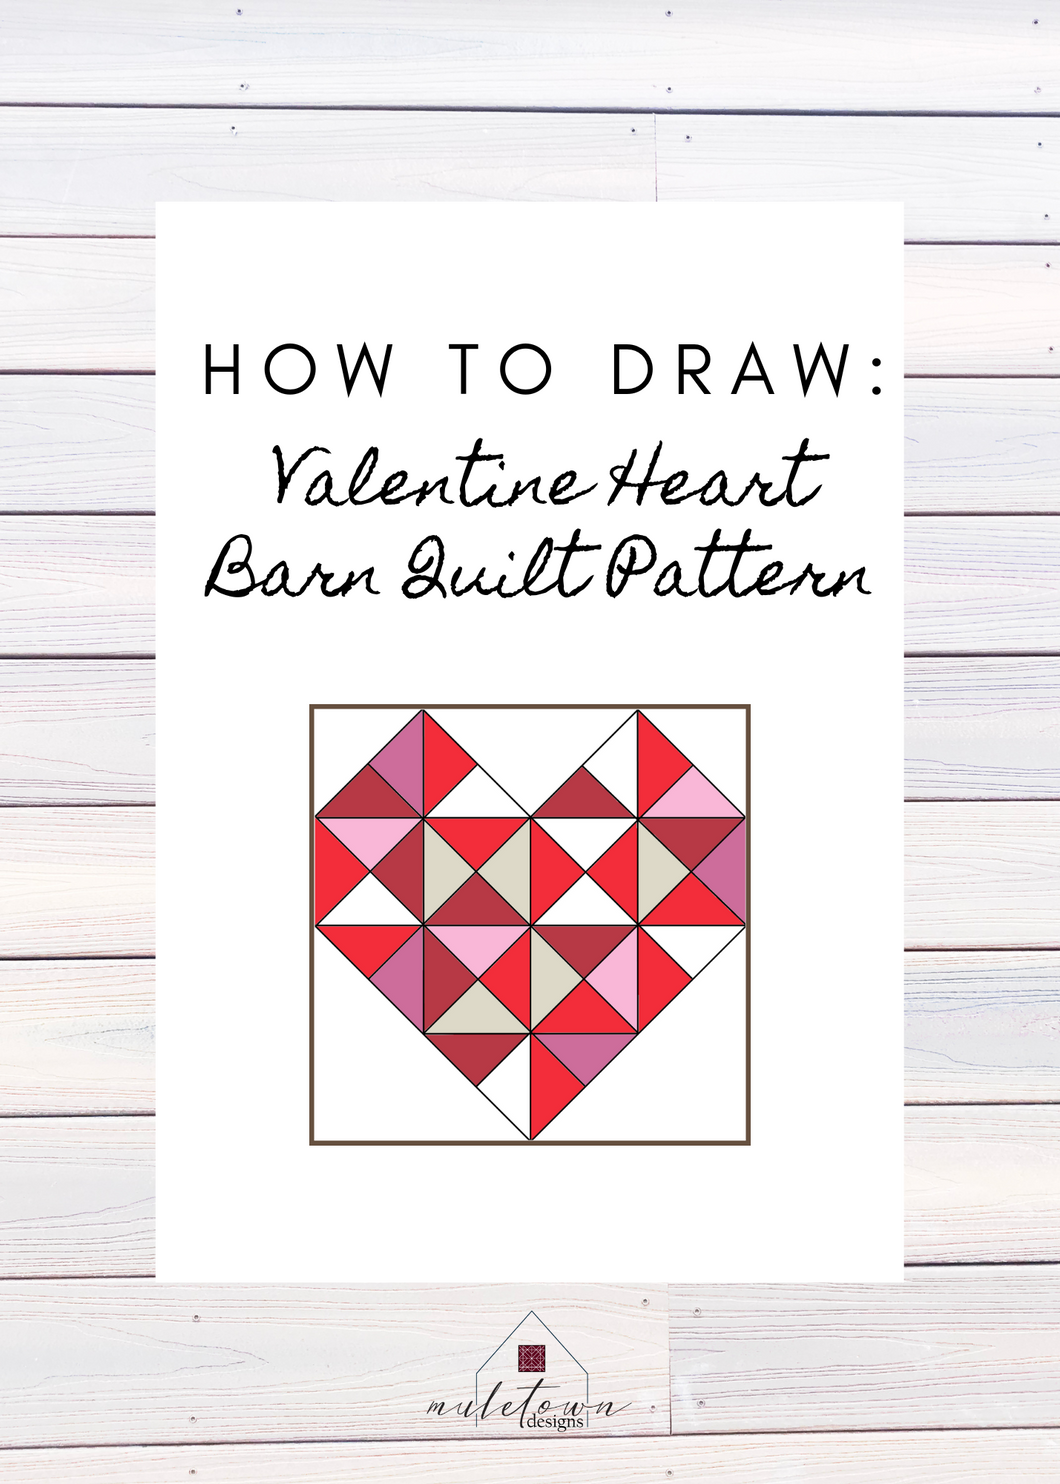 Valentine Heart Pattern Instructions - DIGITAL DOWNLOAD